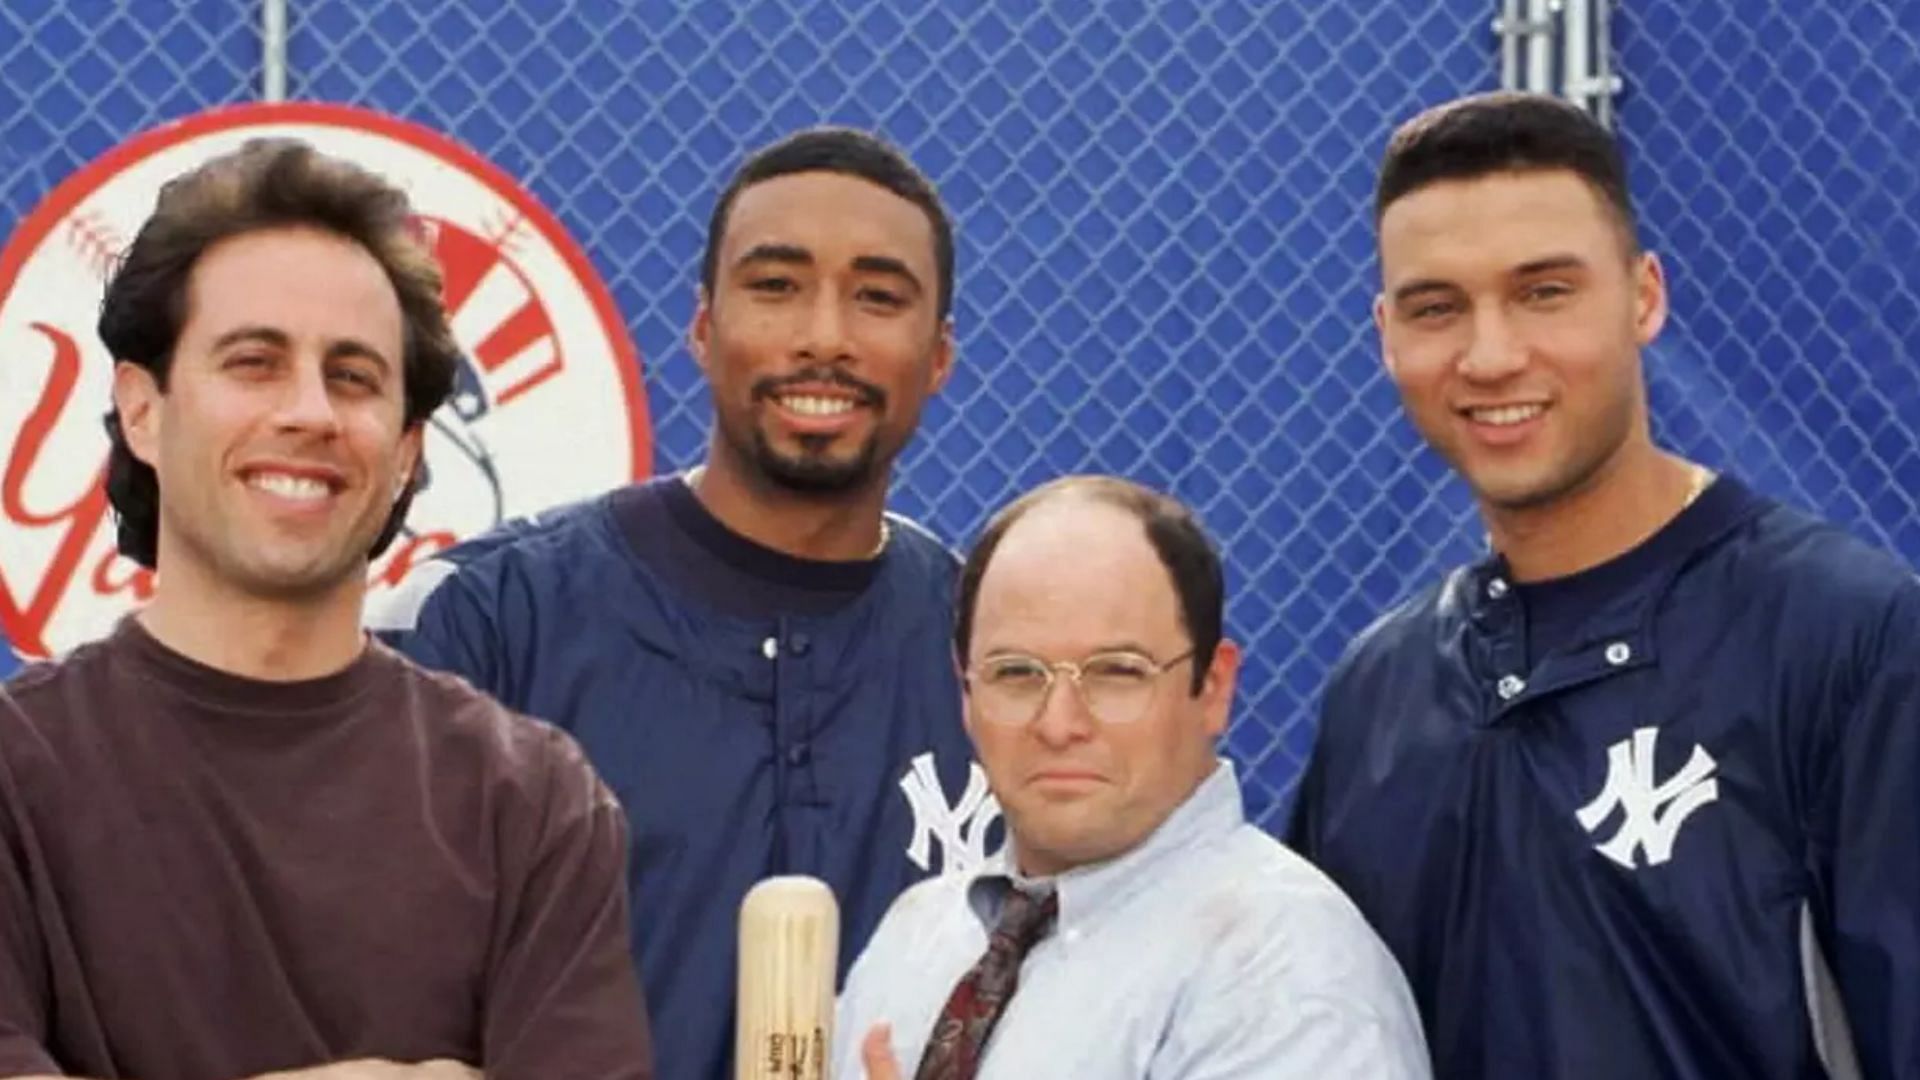 Seinfeld-new York Yankees #seinfeld #newyorkyankees #baseball #sitcom